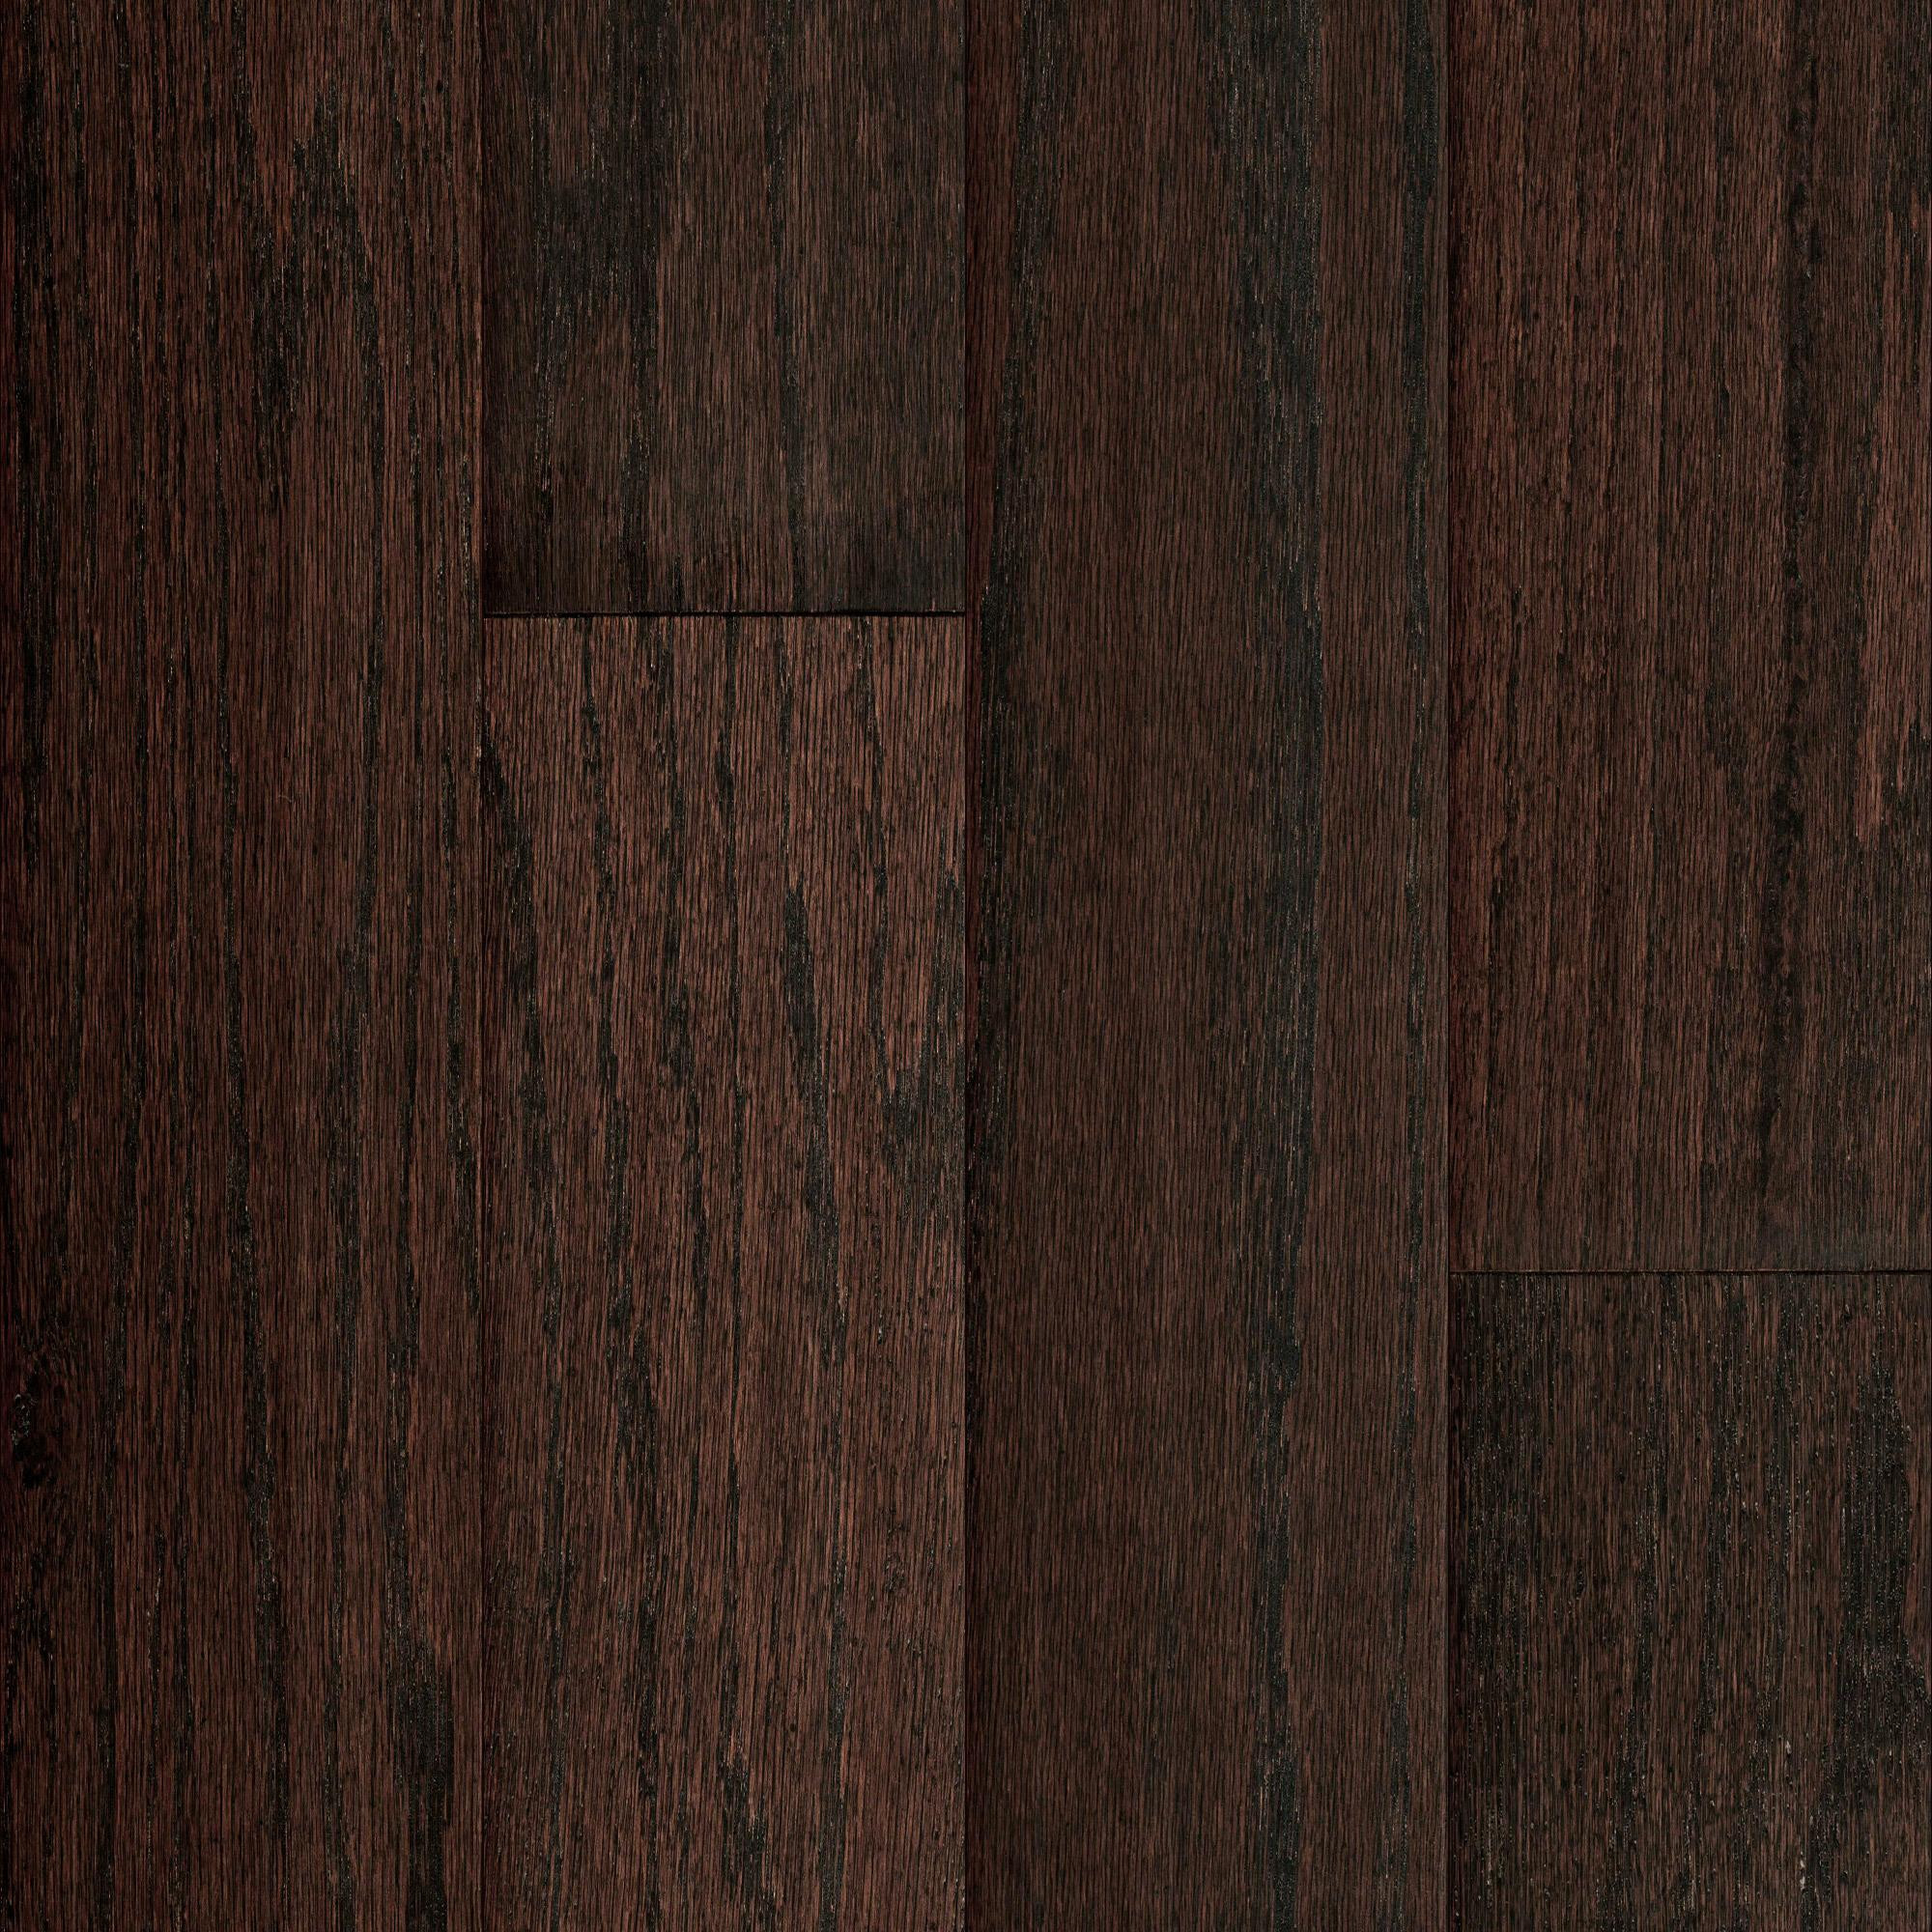 12 Spectacular Hardwood Flooring Below Grade 2024 free download hardwood flooring below grade of mullican newtown plank oak bridle 1 2 thick 5 wide engineered intended for mullican newtown plank oak bridle 1 2 thick 5 wide engineered hardwood flooring